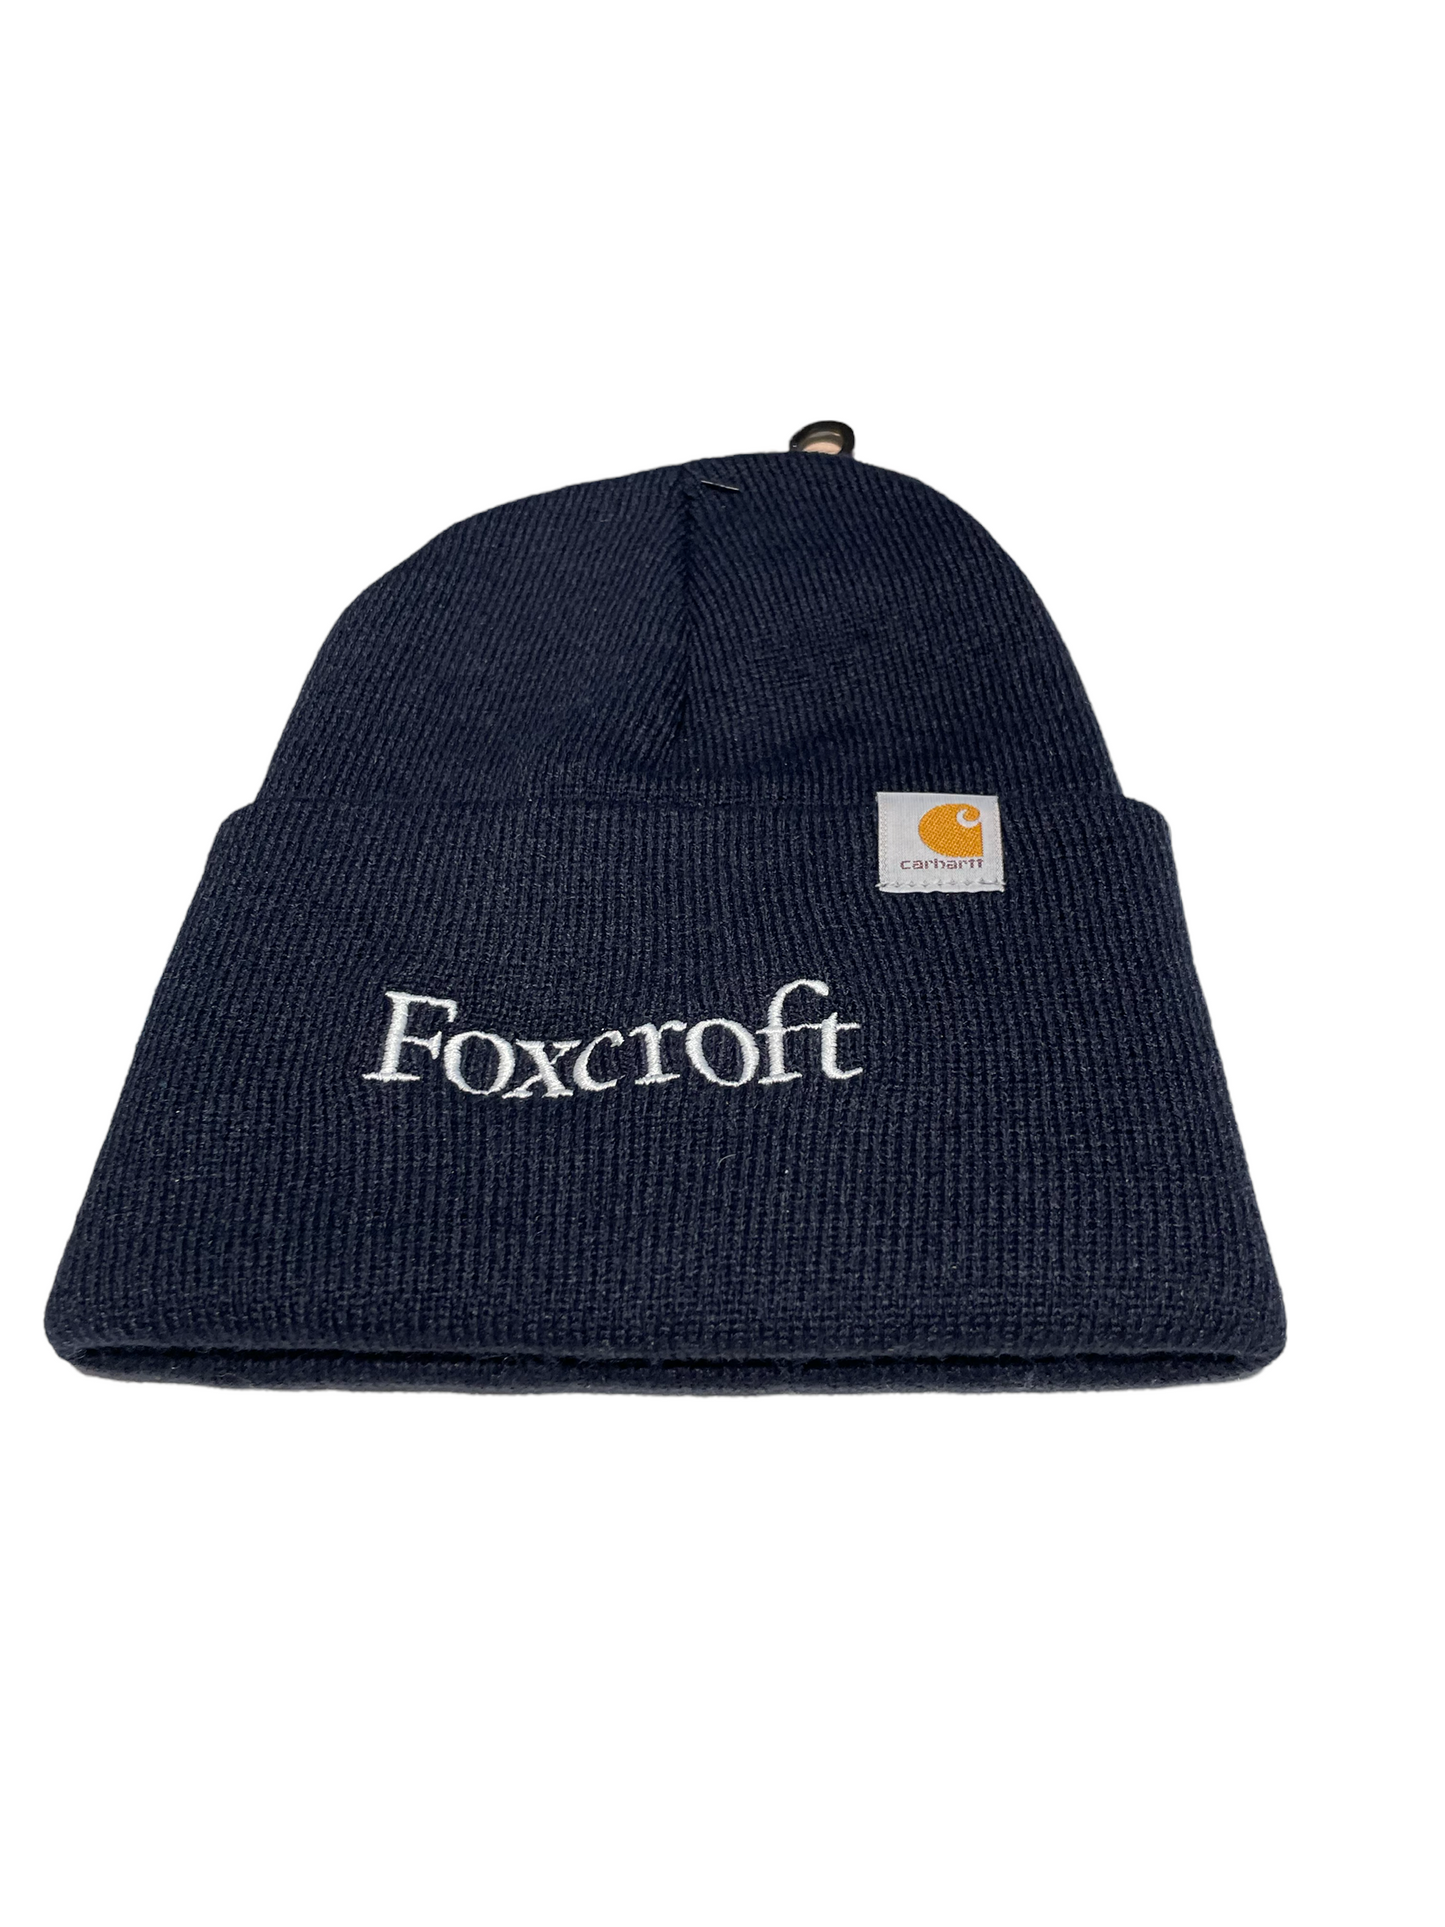 Carhartt Beanies with Foxcroft Logo Grey or Navy